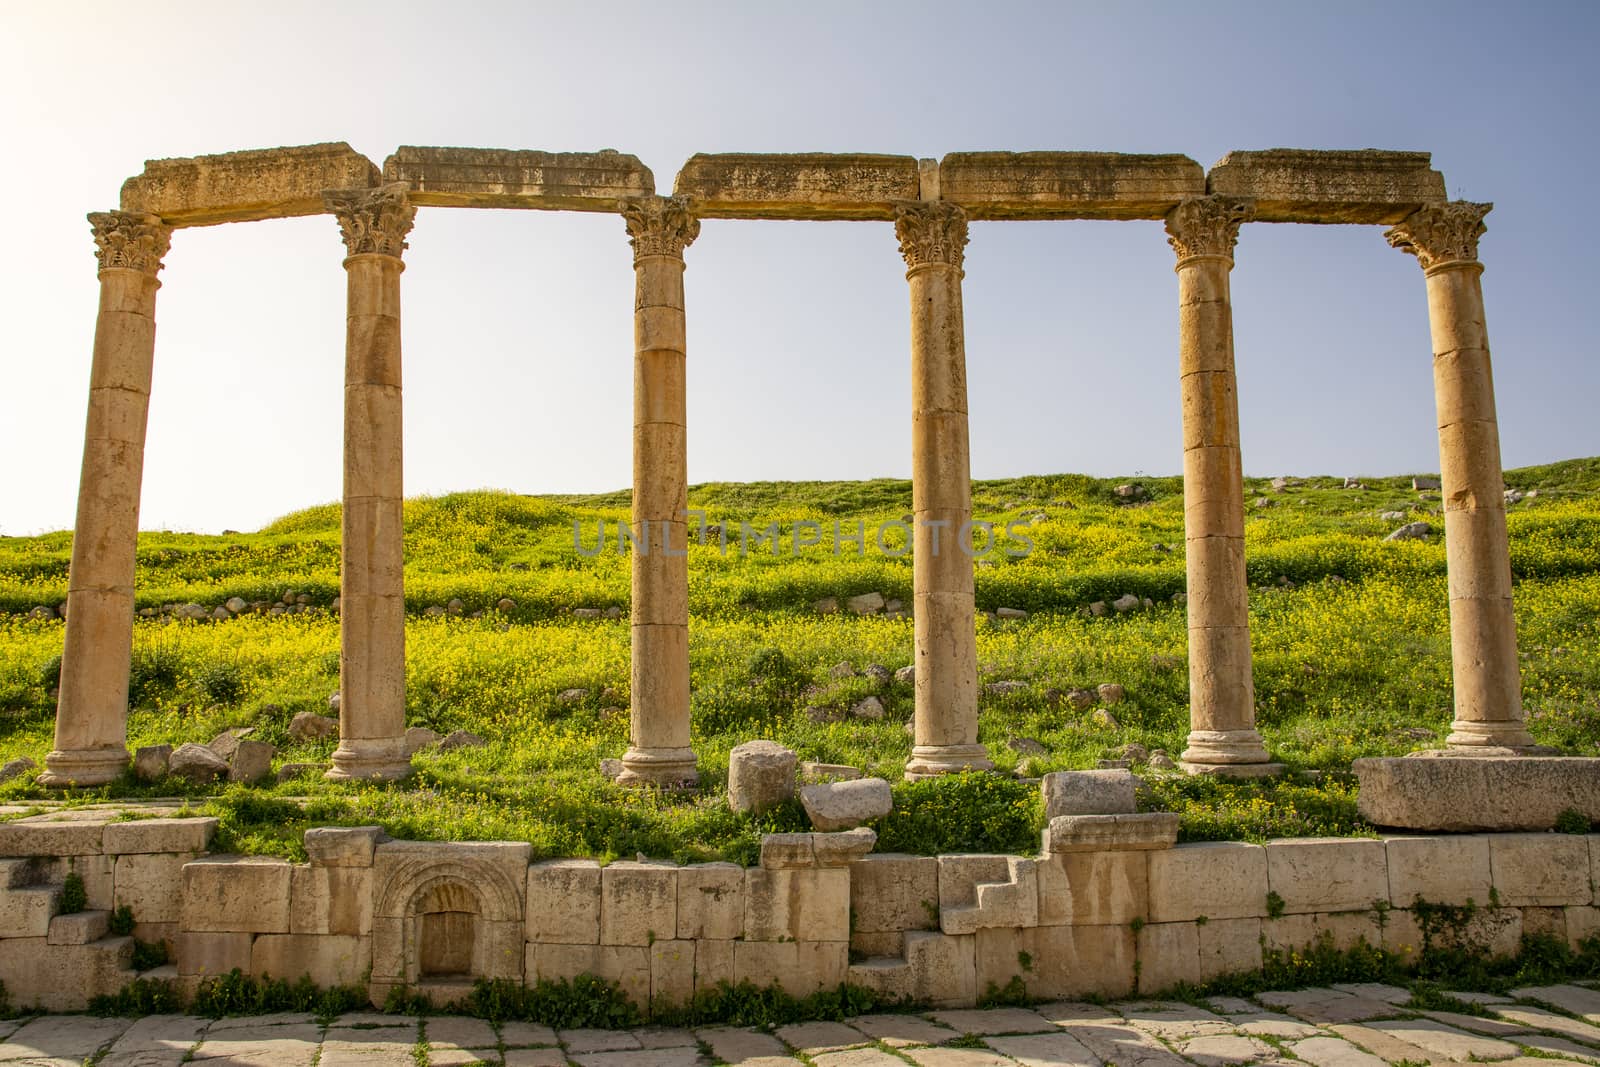 Pillars of the Colonnaded Street at the Roman historical site of Gerasa, Jerash, Jordan by kb79